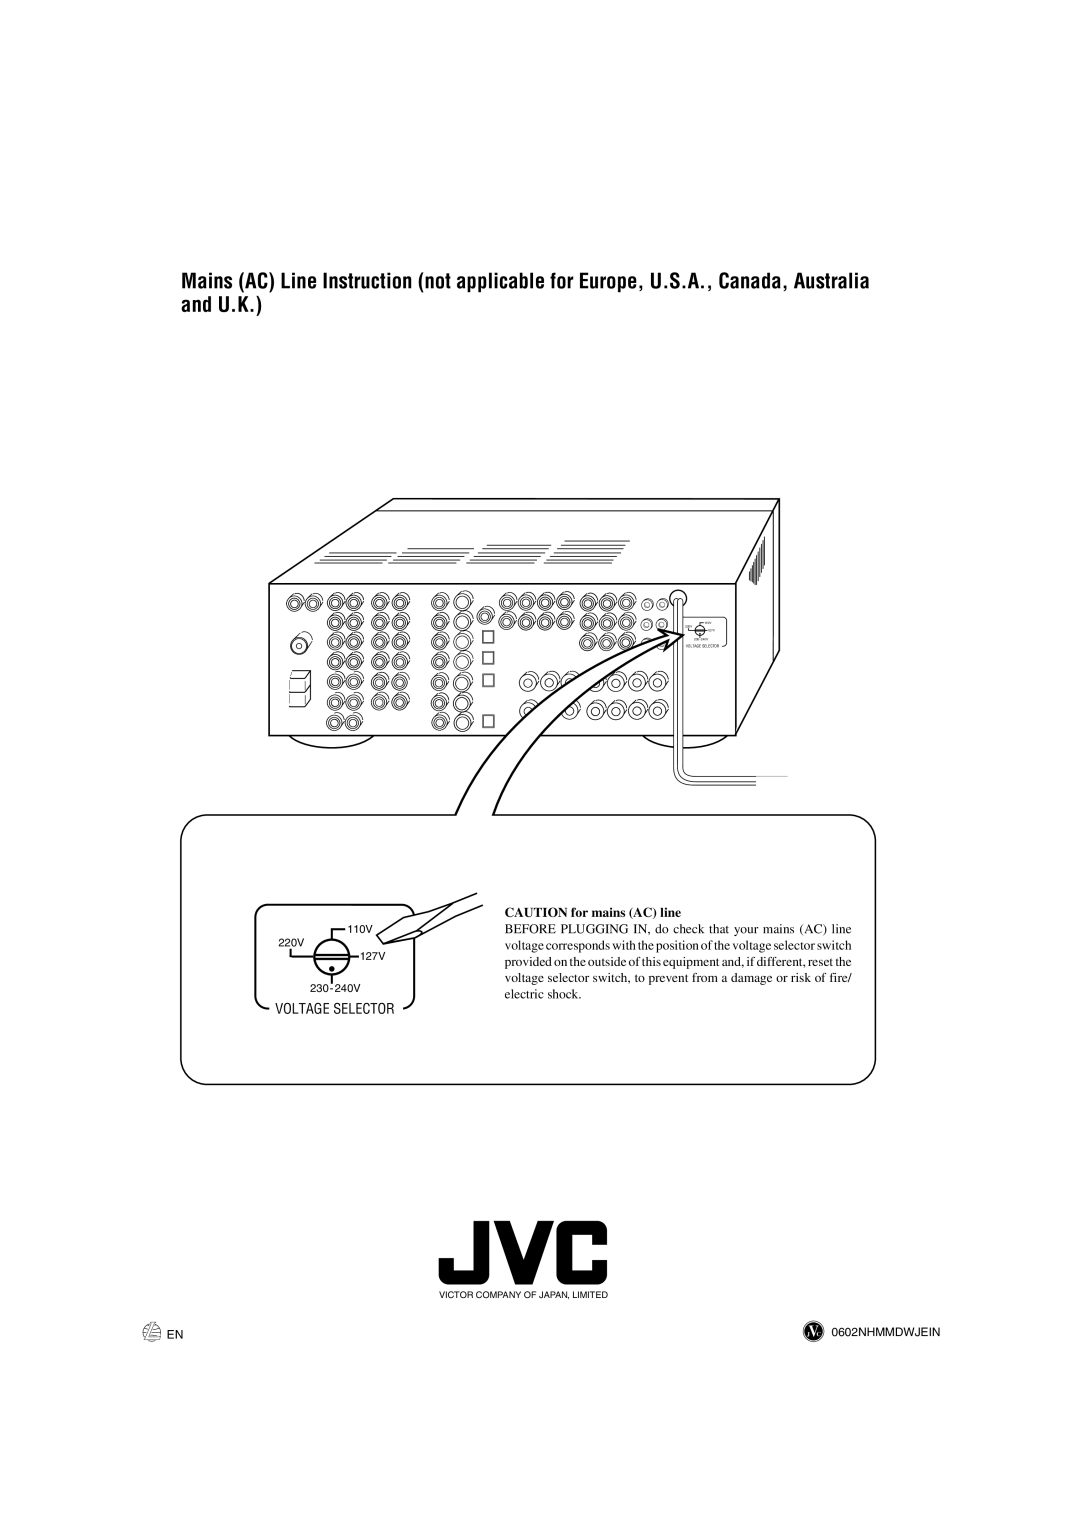 JVC LVT0870-006A, RX-8022PSL manual Voltage Selector, CAUTION for mains AC line, electric shock, JVC 0602NHMMDWJEIN 